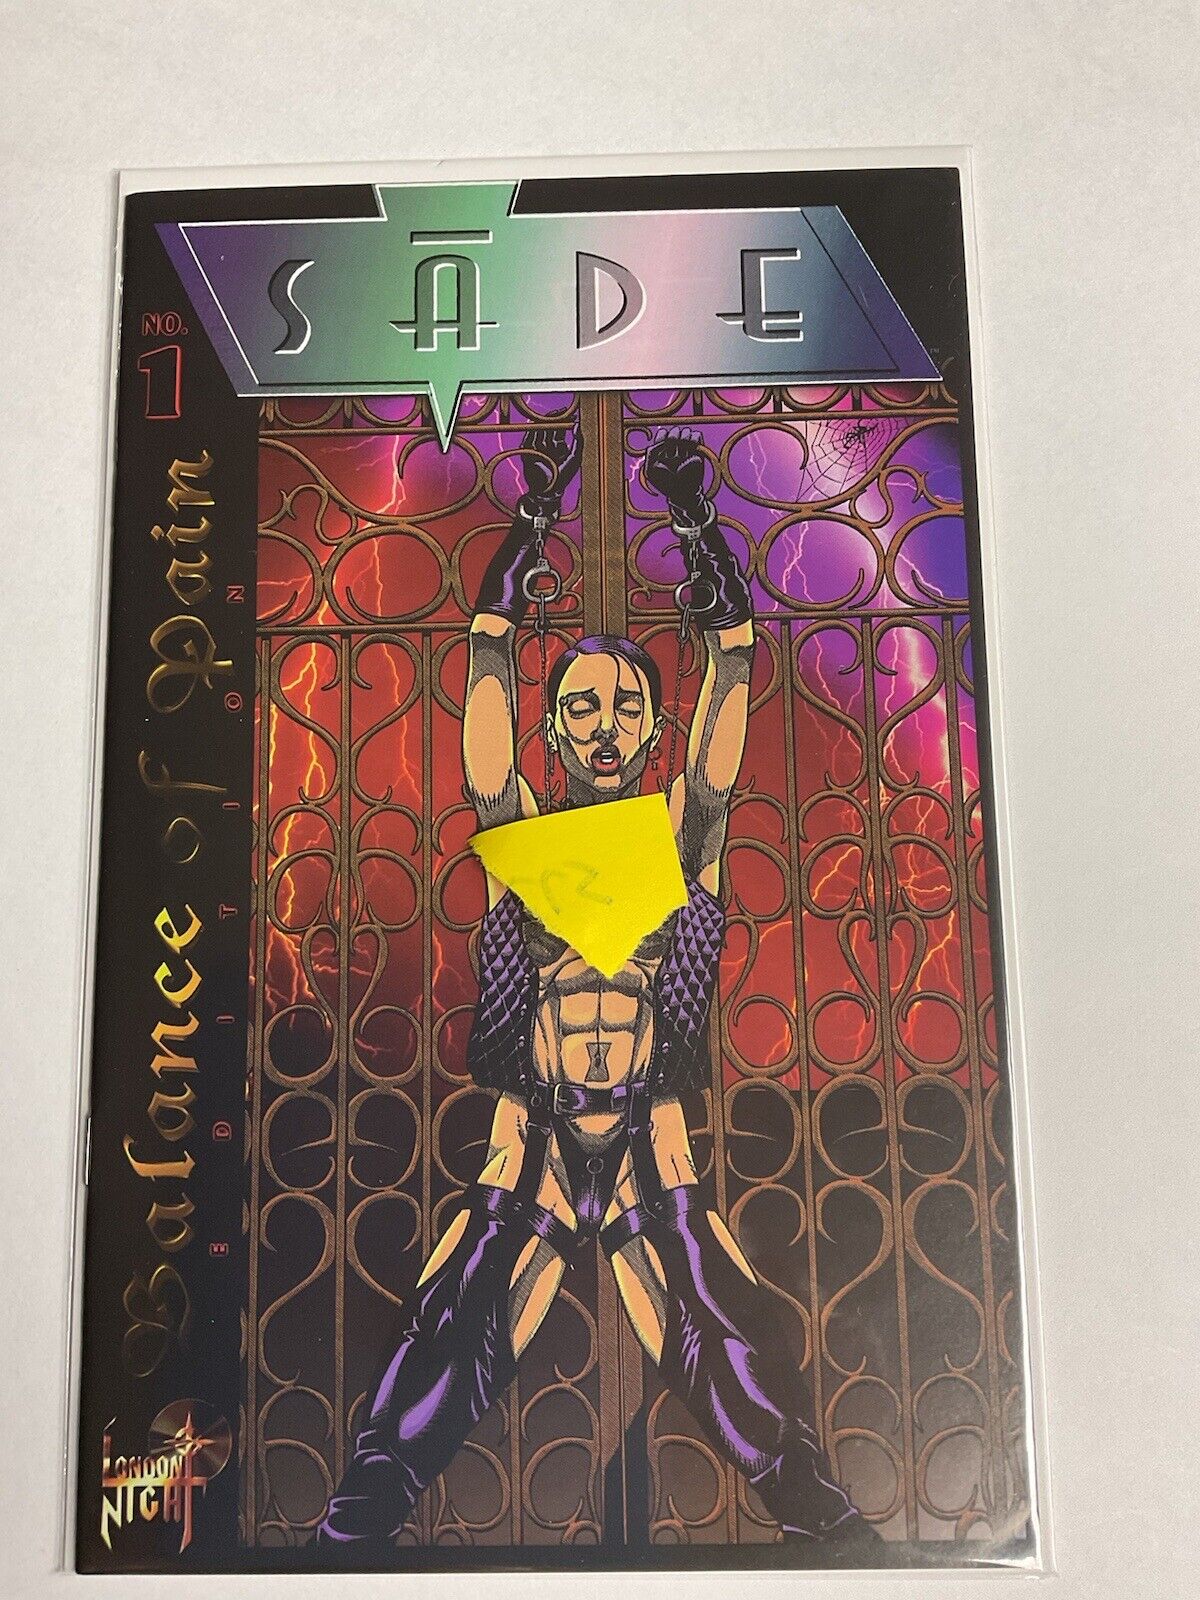 Sade #1  (1996) Balance of Pain ~ Unread NM 9.4 London Night Rare Low Print Run